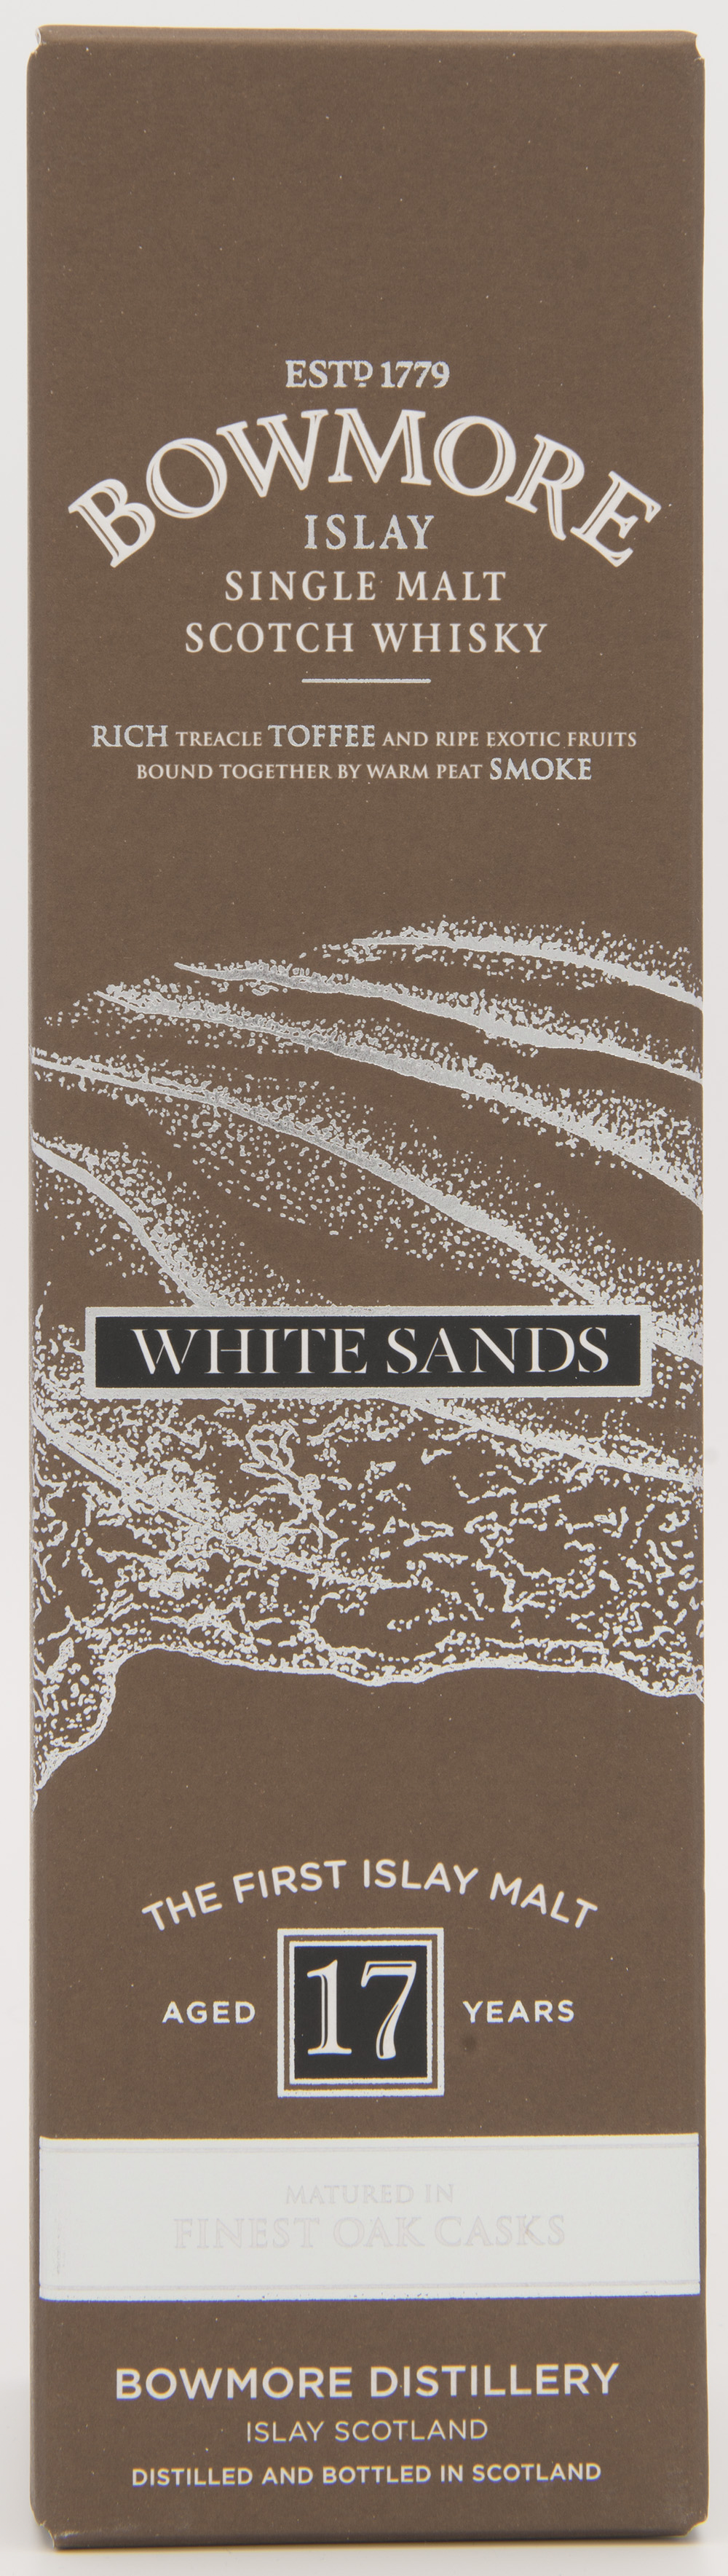 Billede: DSC_3844 Bowmore White Sands 17 - box front.jpg